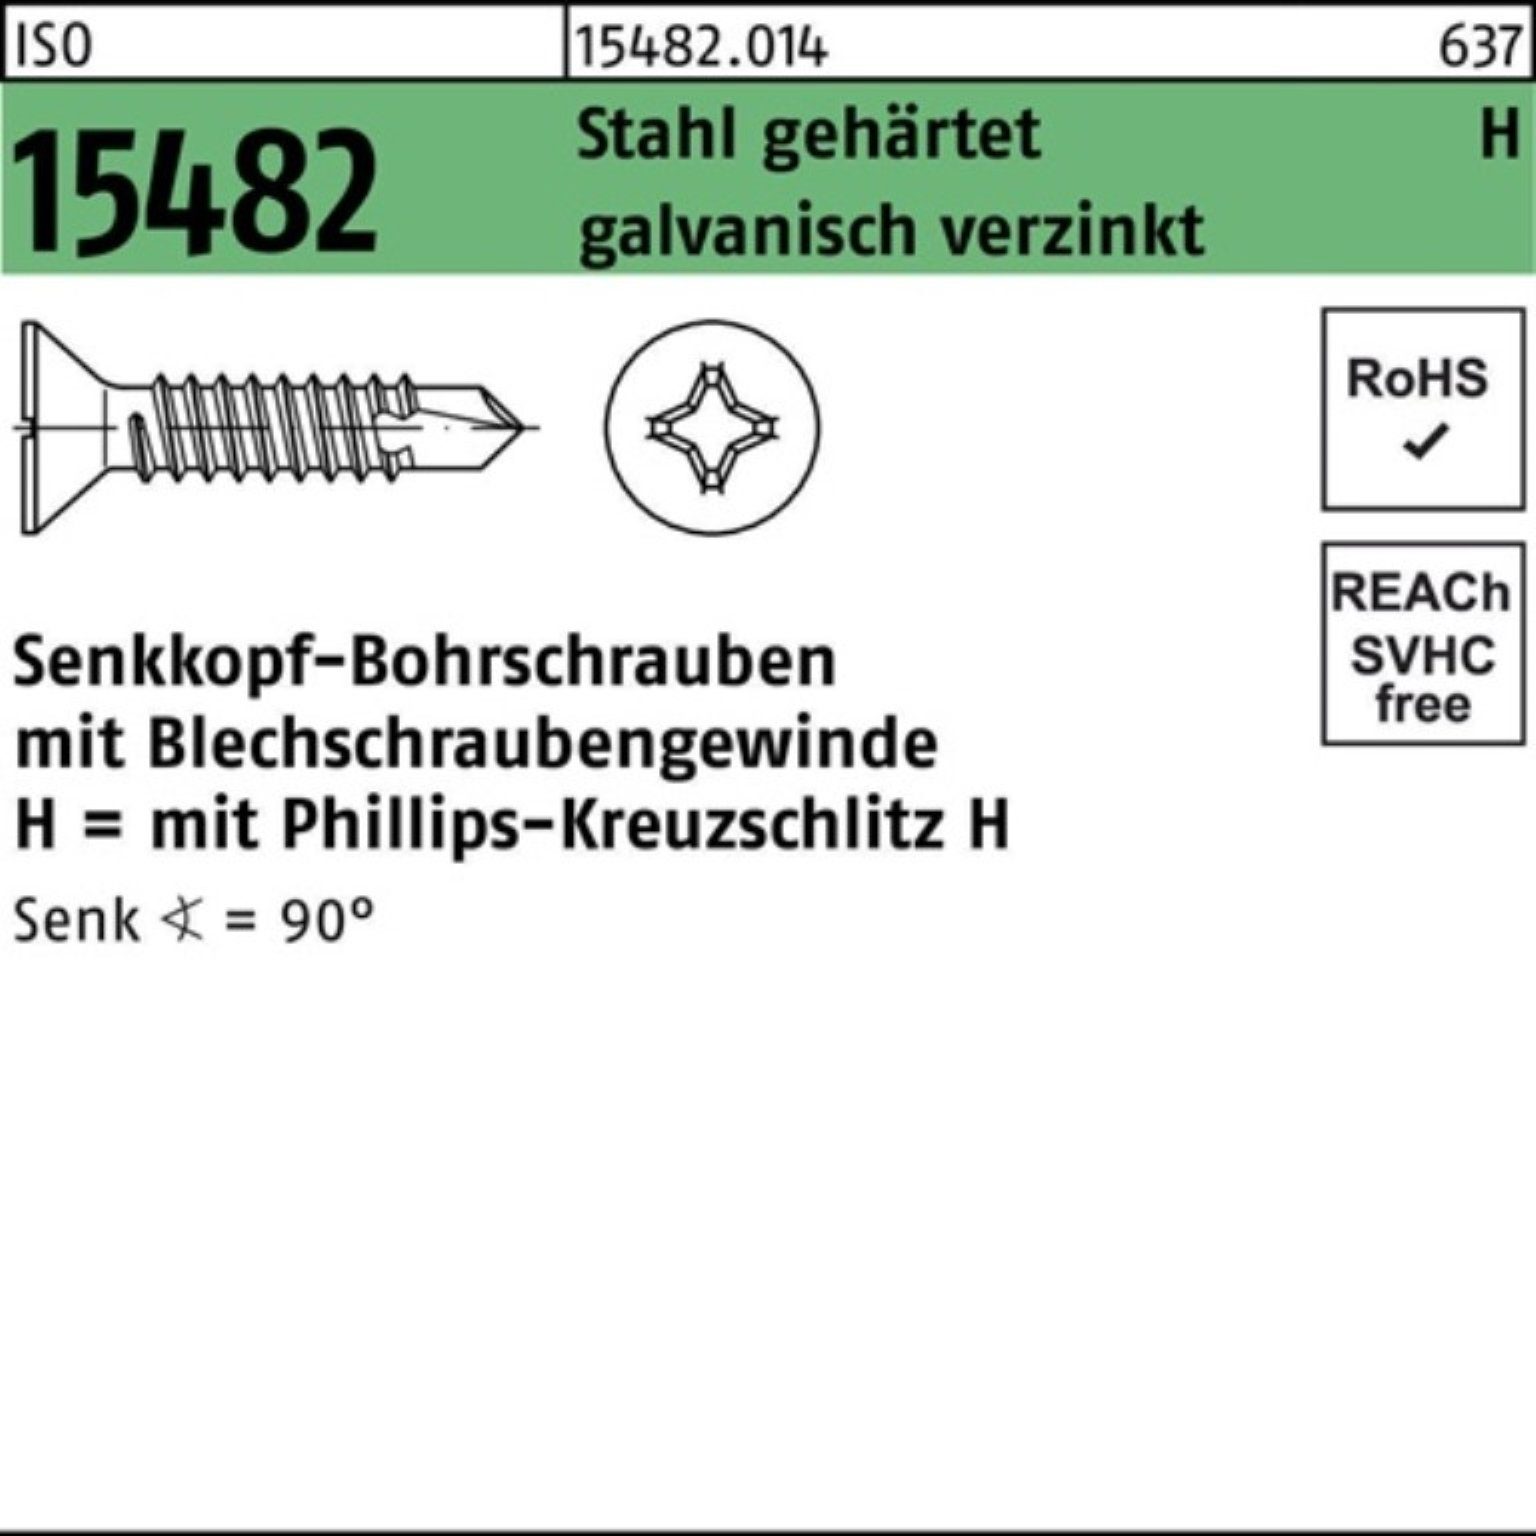 Bohrschraube 4,8x45-H 15482 ST gehärtet 500er PH g ISO Reyher Pack Stahl Senkbohrschraube